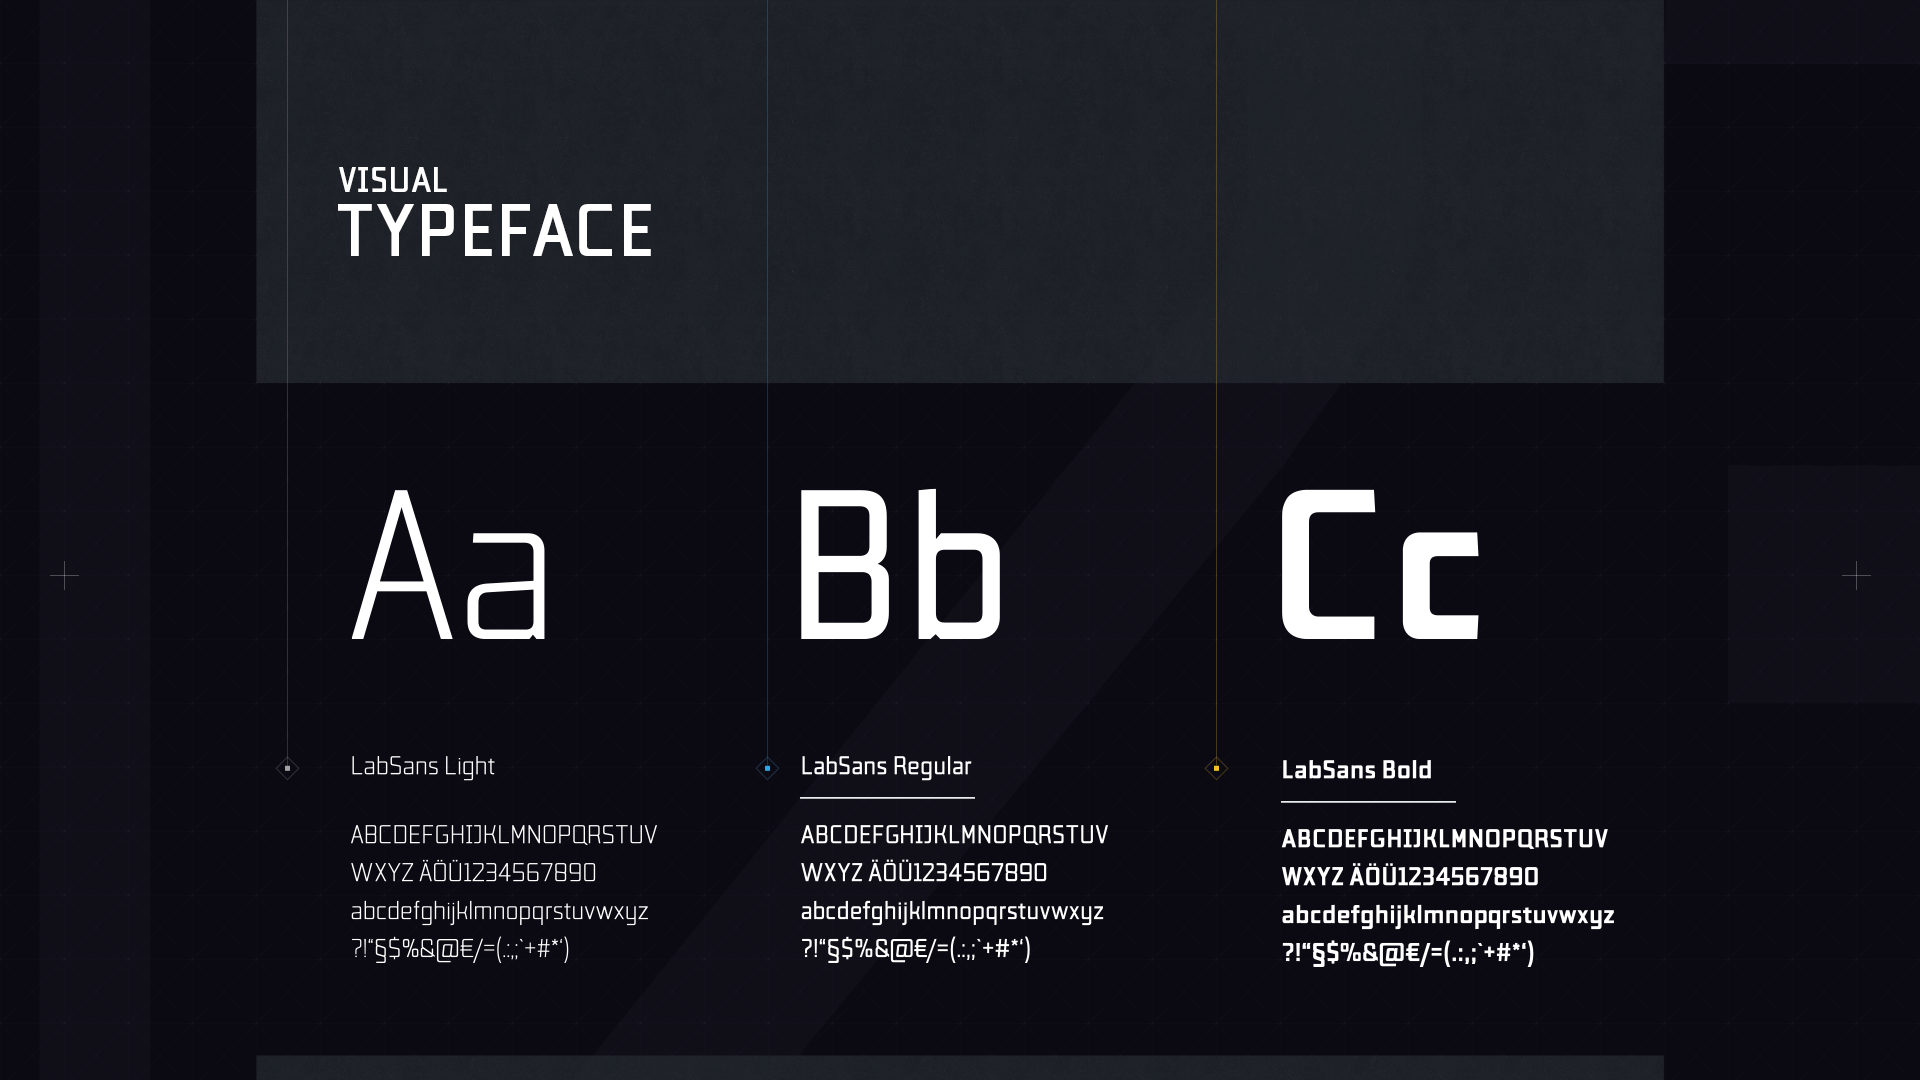 Chosen Typeface